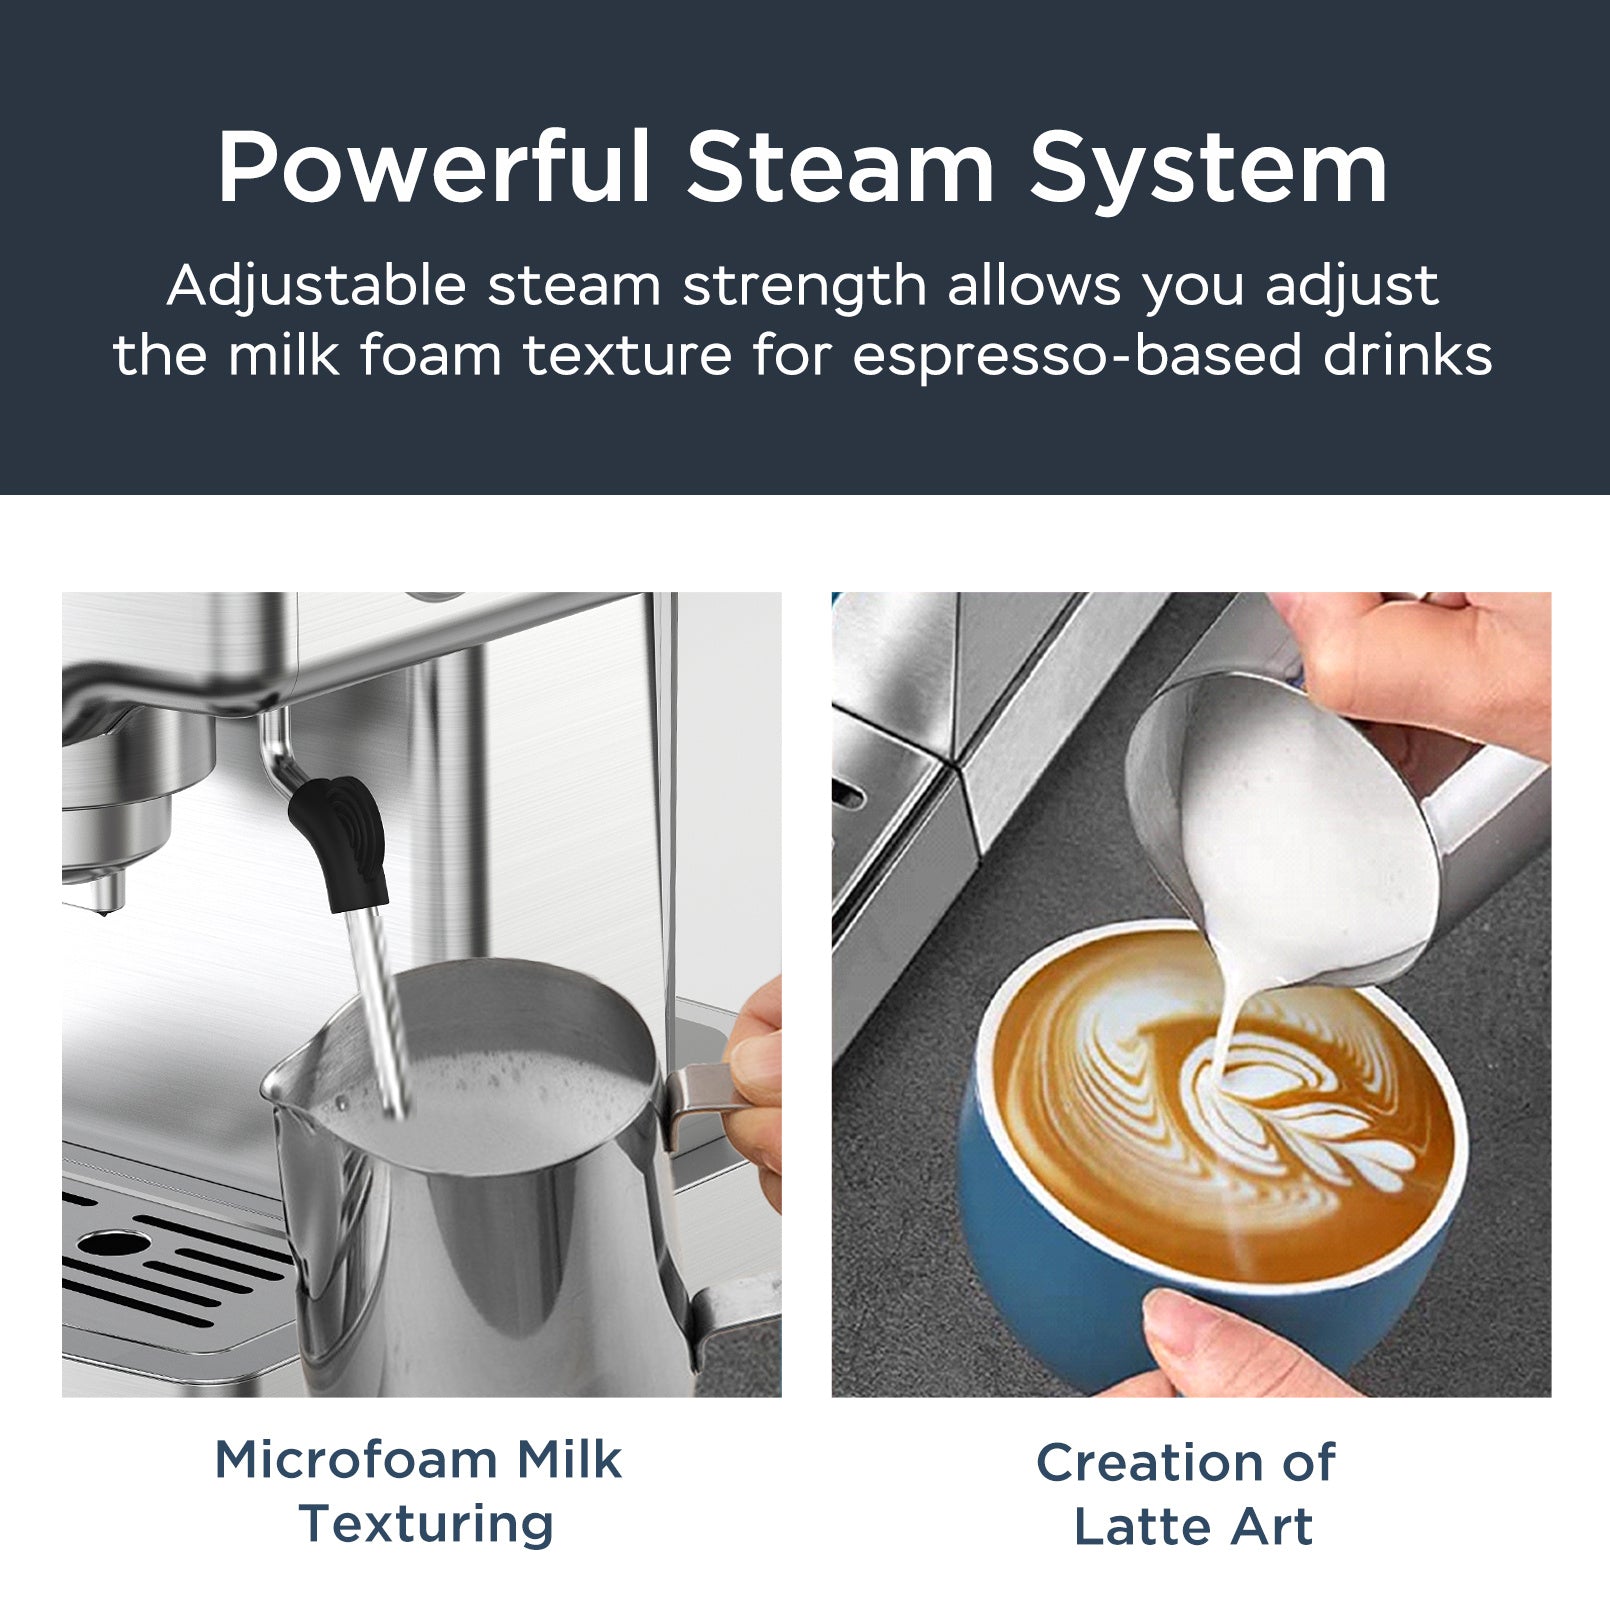 Espresso Machine; 20 bar espresso machine with milk frother for latte; cappuccino; Machiato; for home espresso maker; 1.8L Water Tank; Stainless Steel